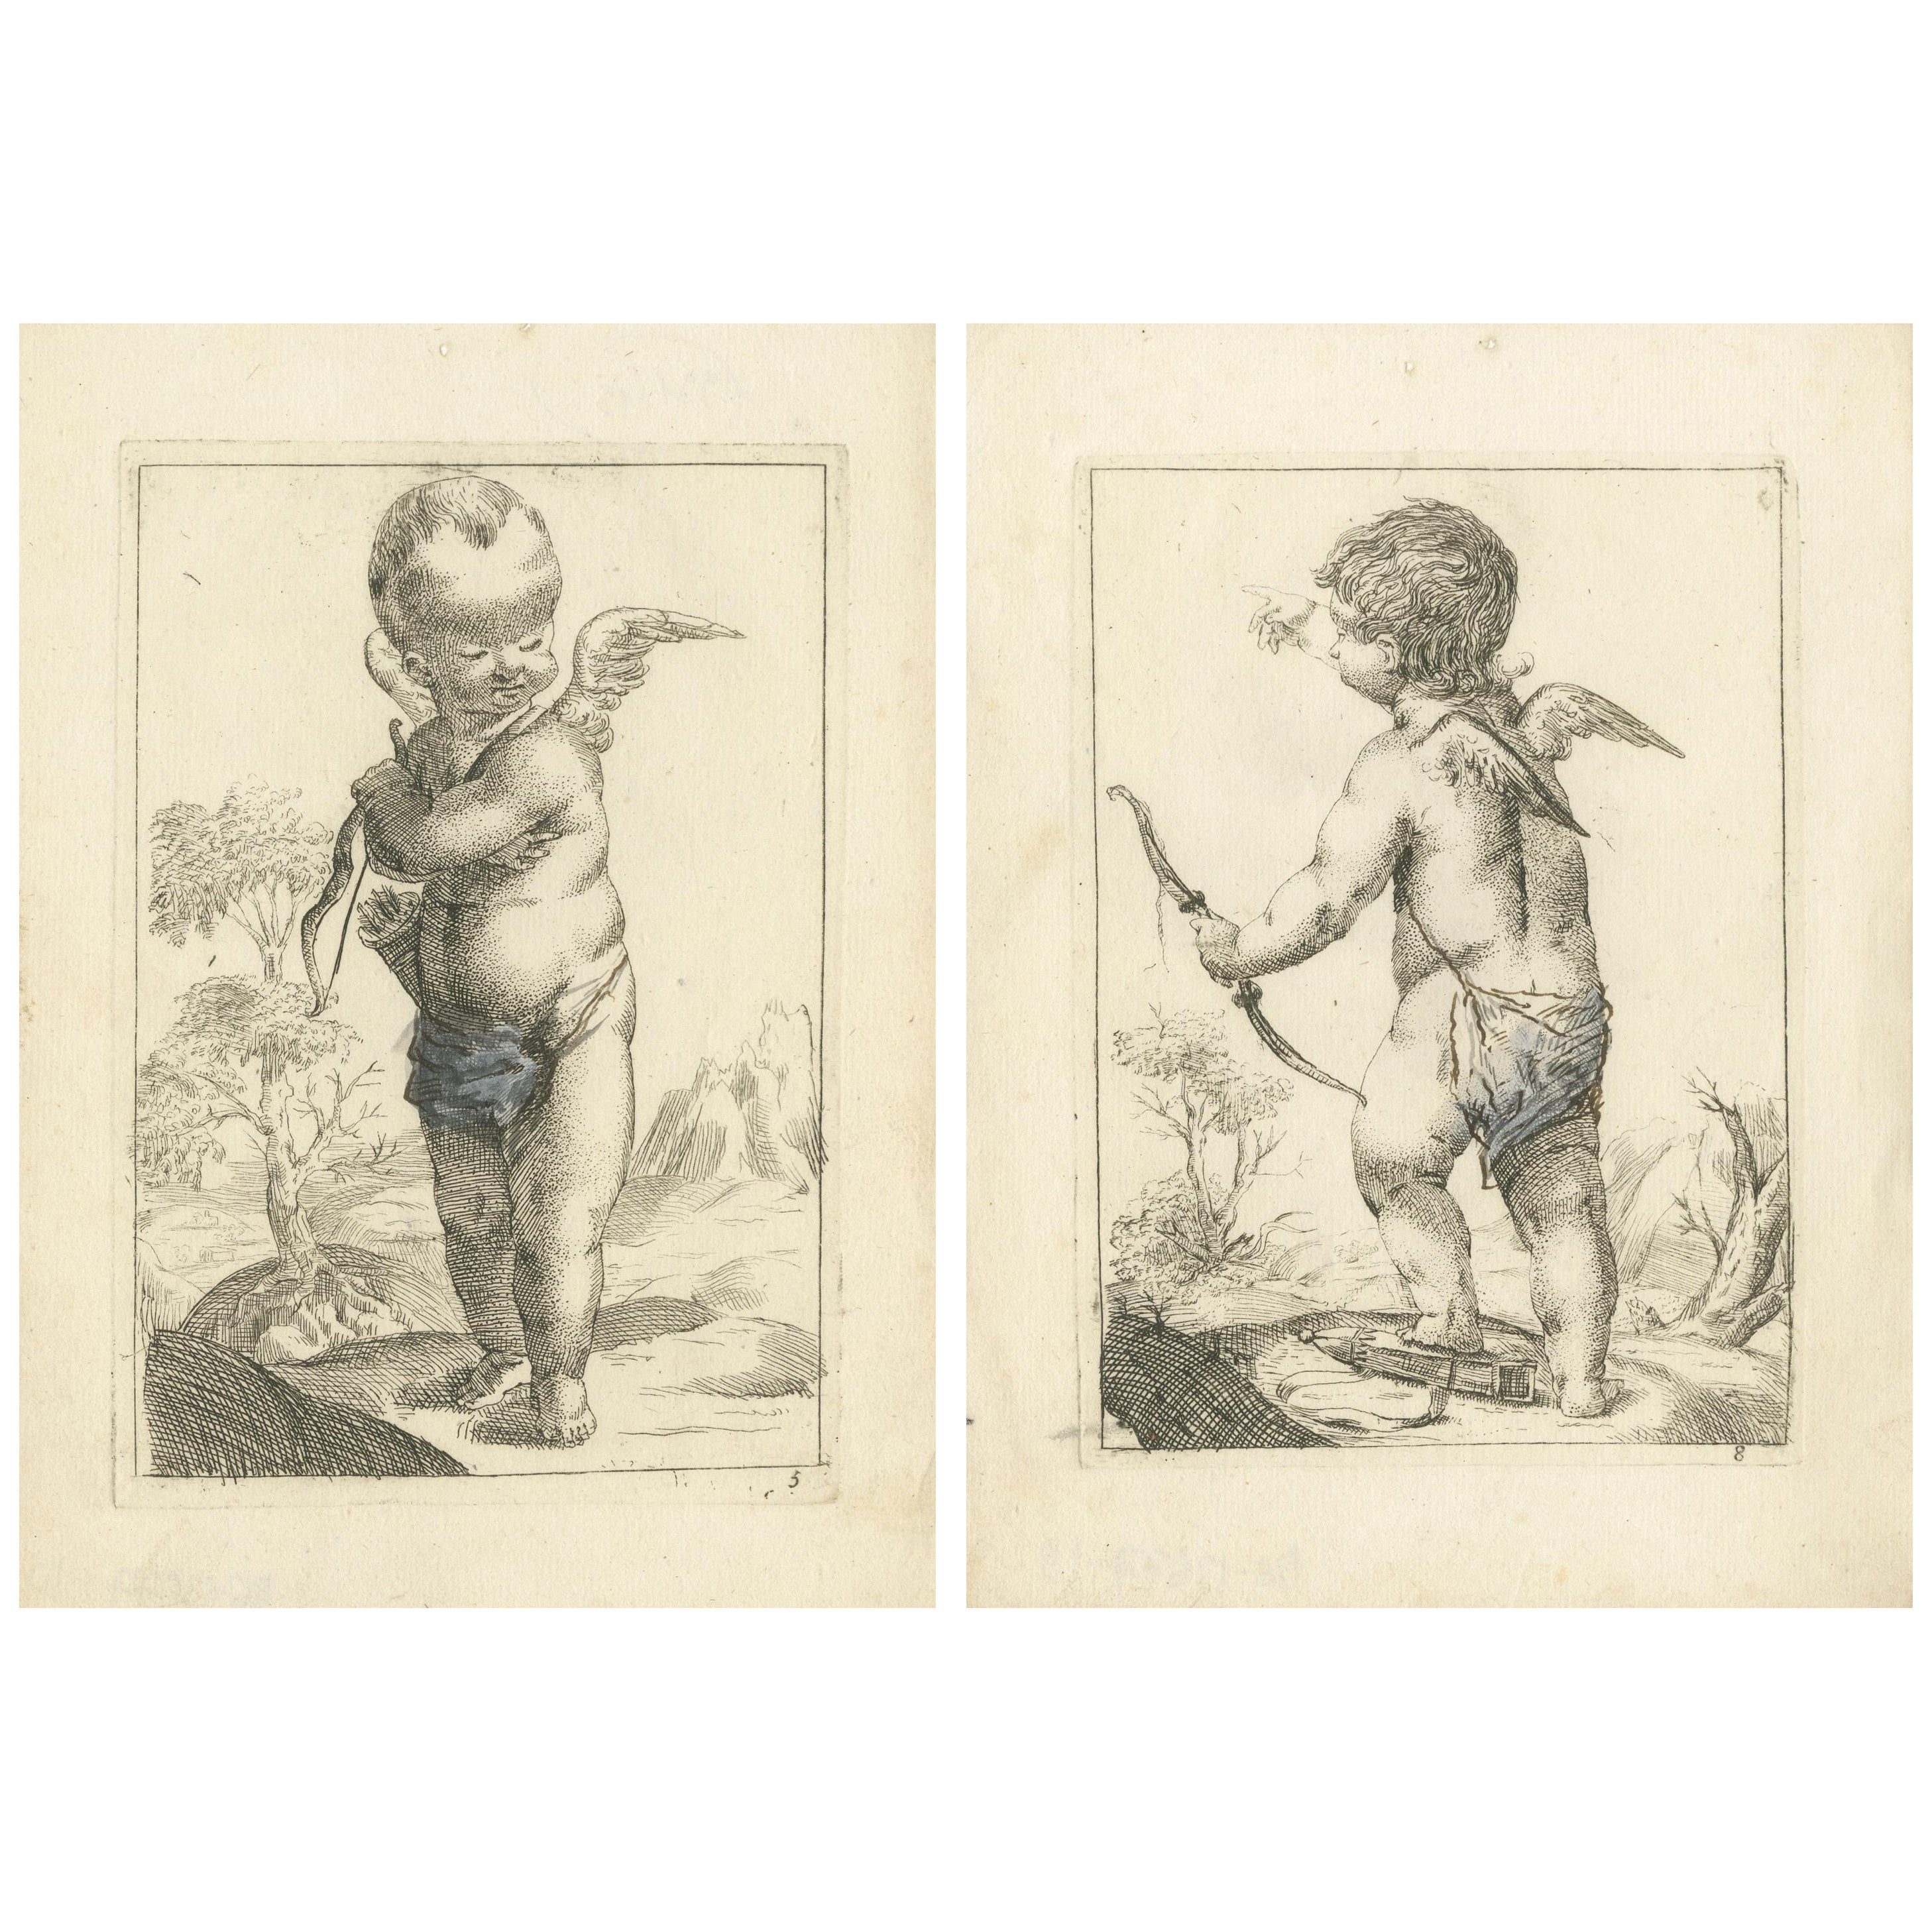 Skurrile Bogenschützen: Duo aus barocken Putten, um 1620